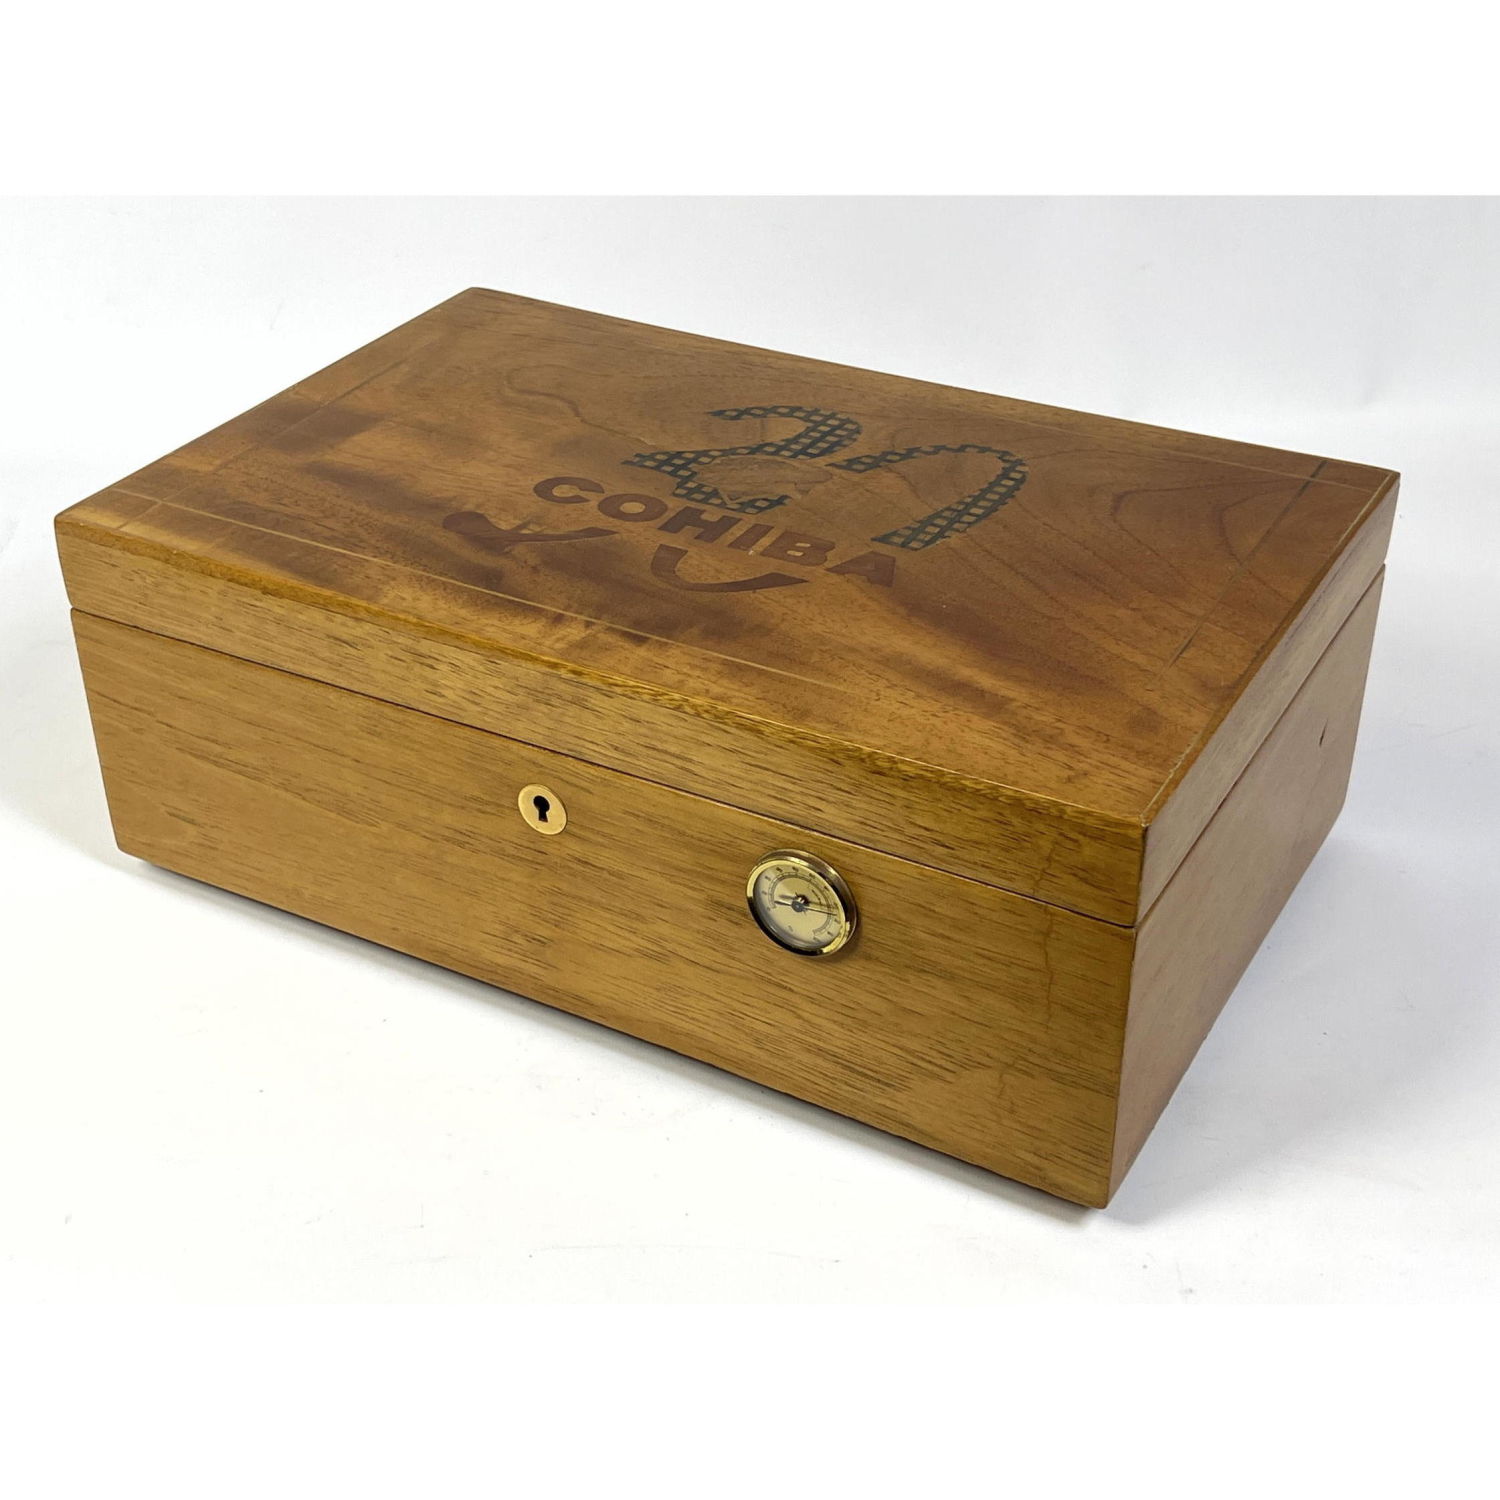 Cuban Humidor 30 Cohiba. Wood Box for